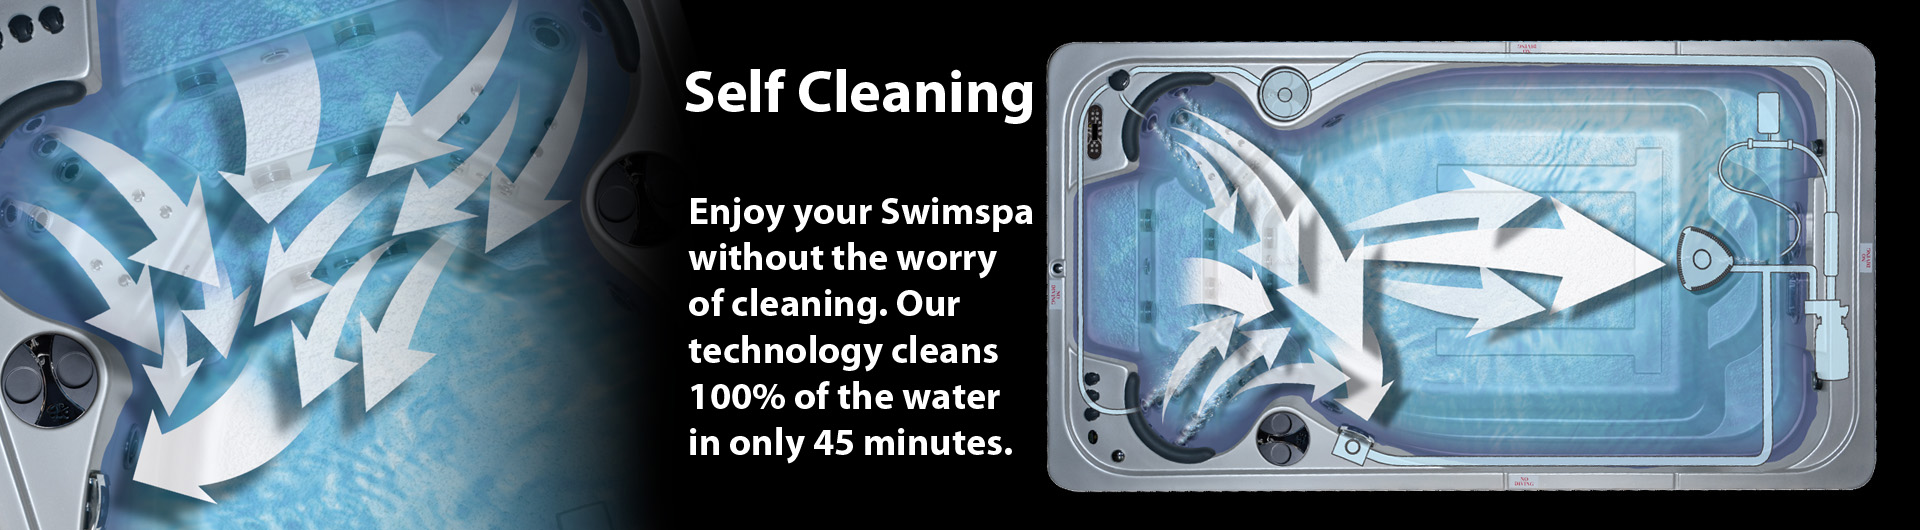 self cleaning swim spa pool